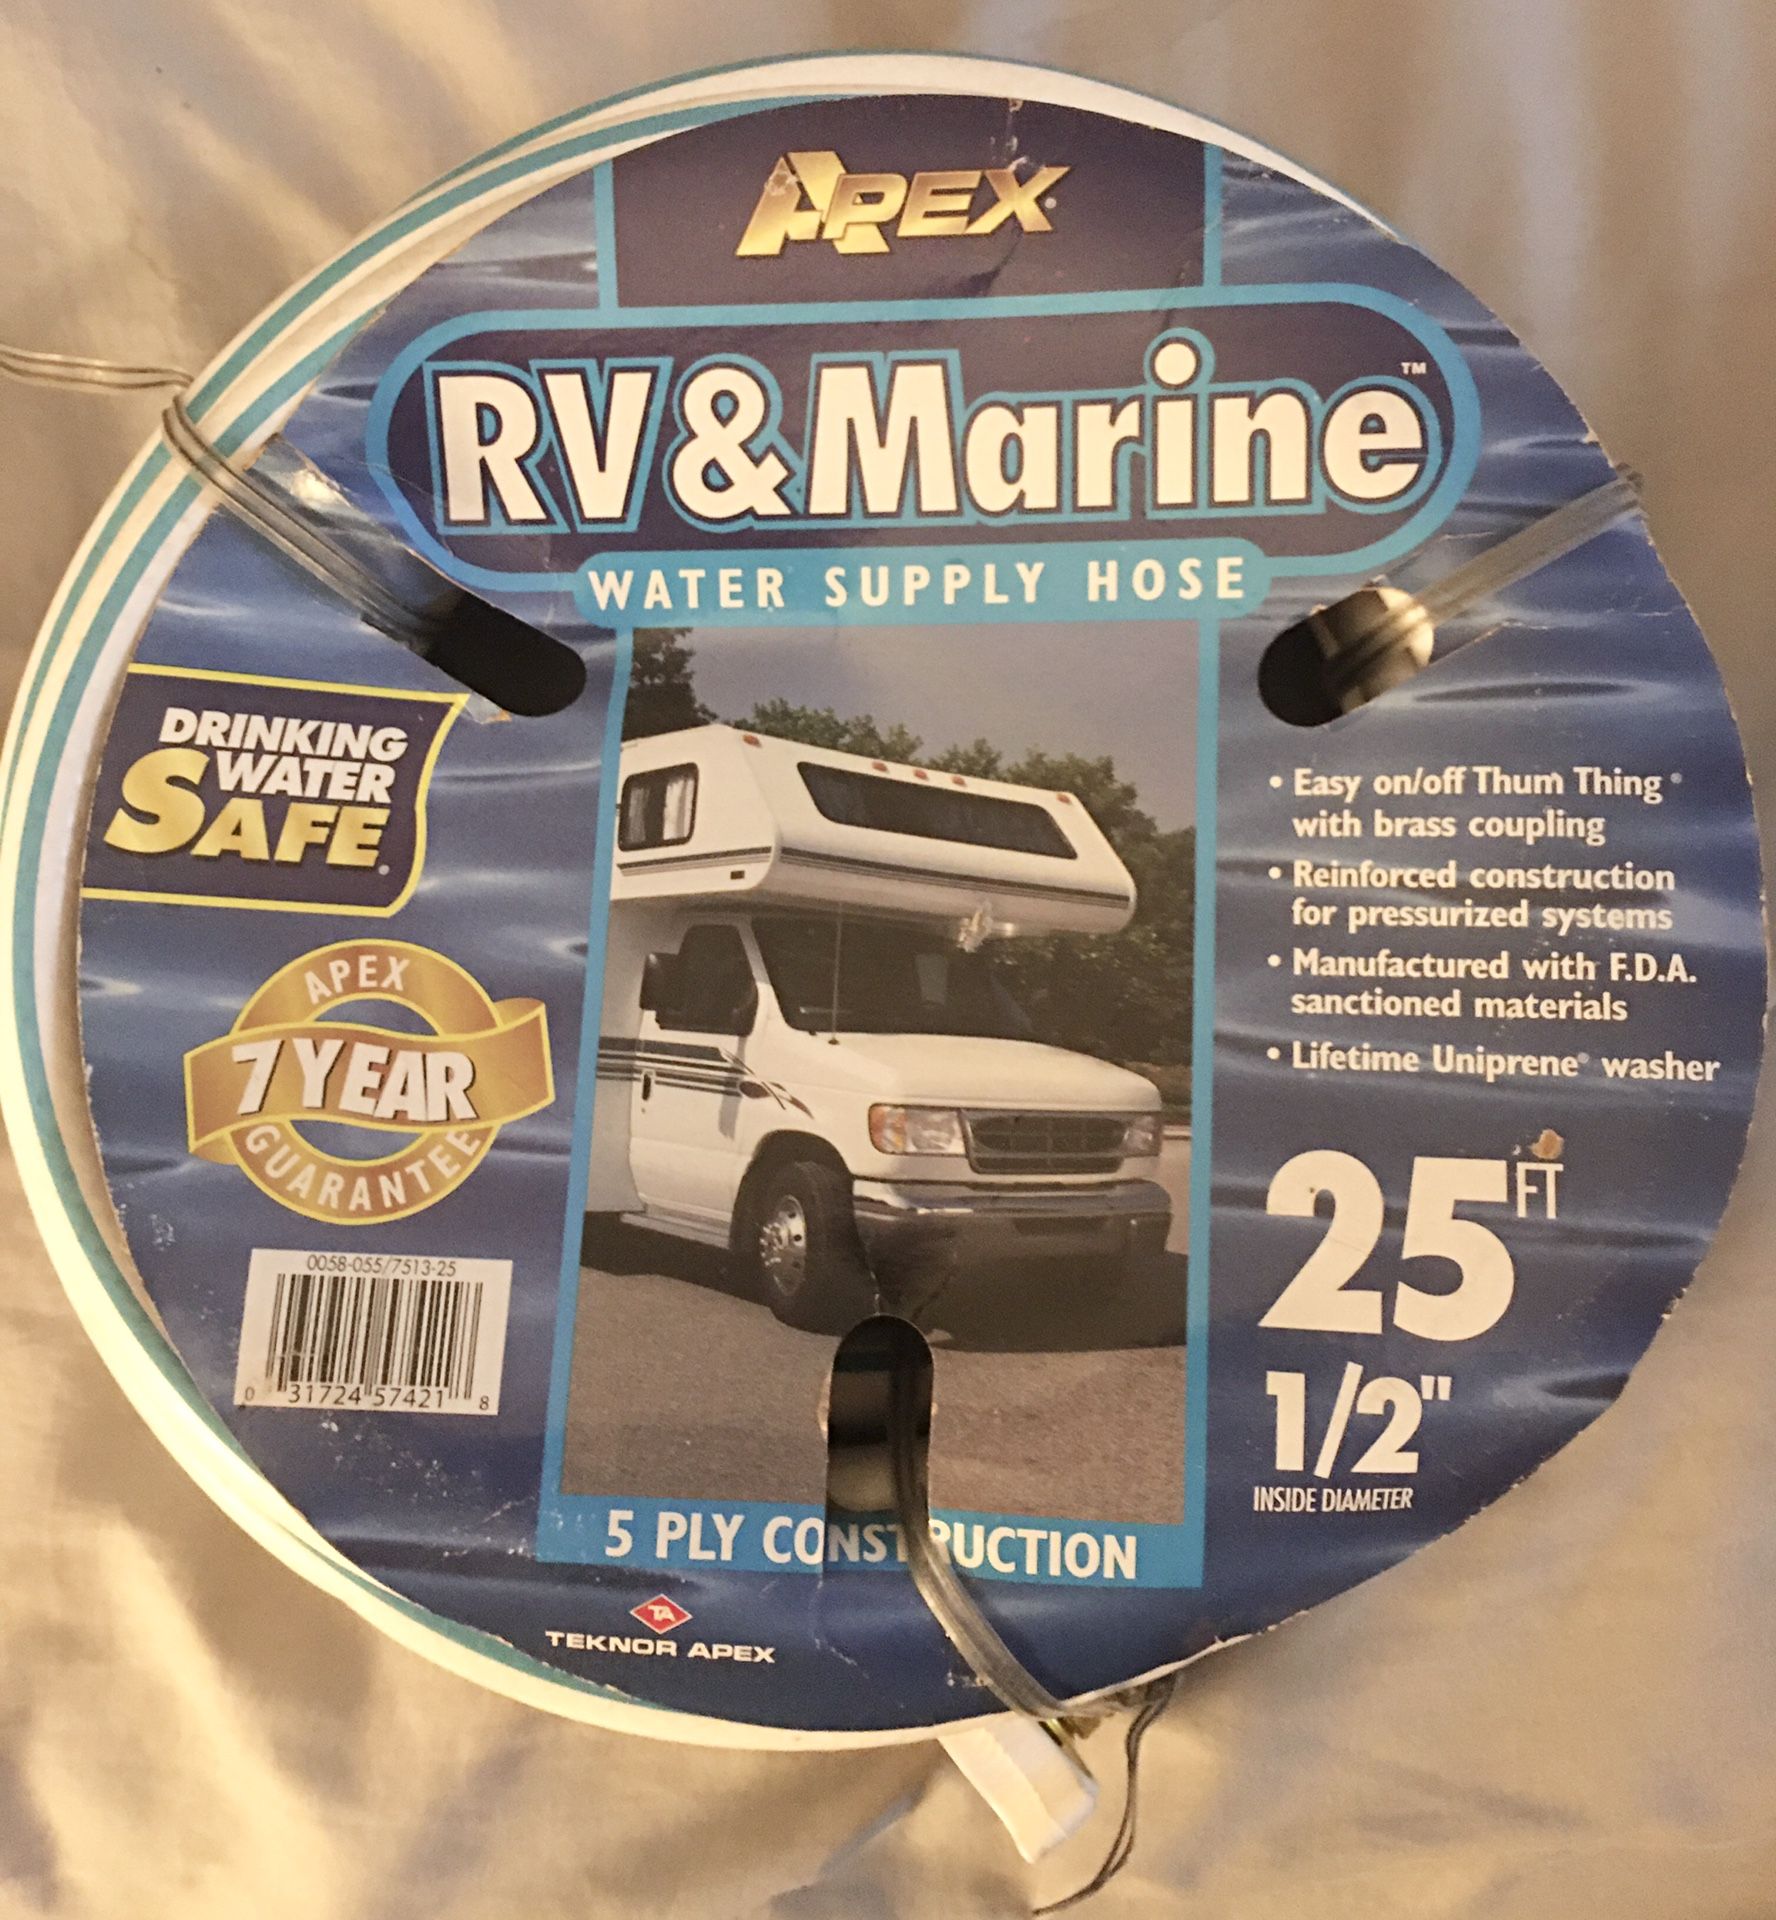 RV & Marine water supply hose